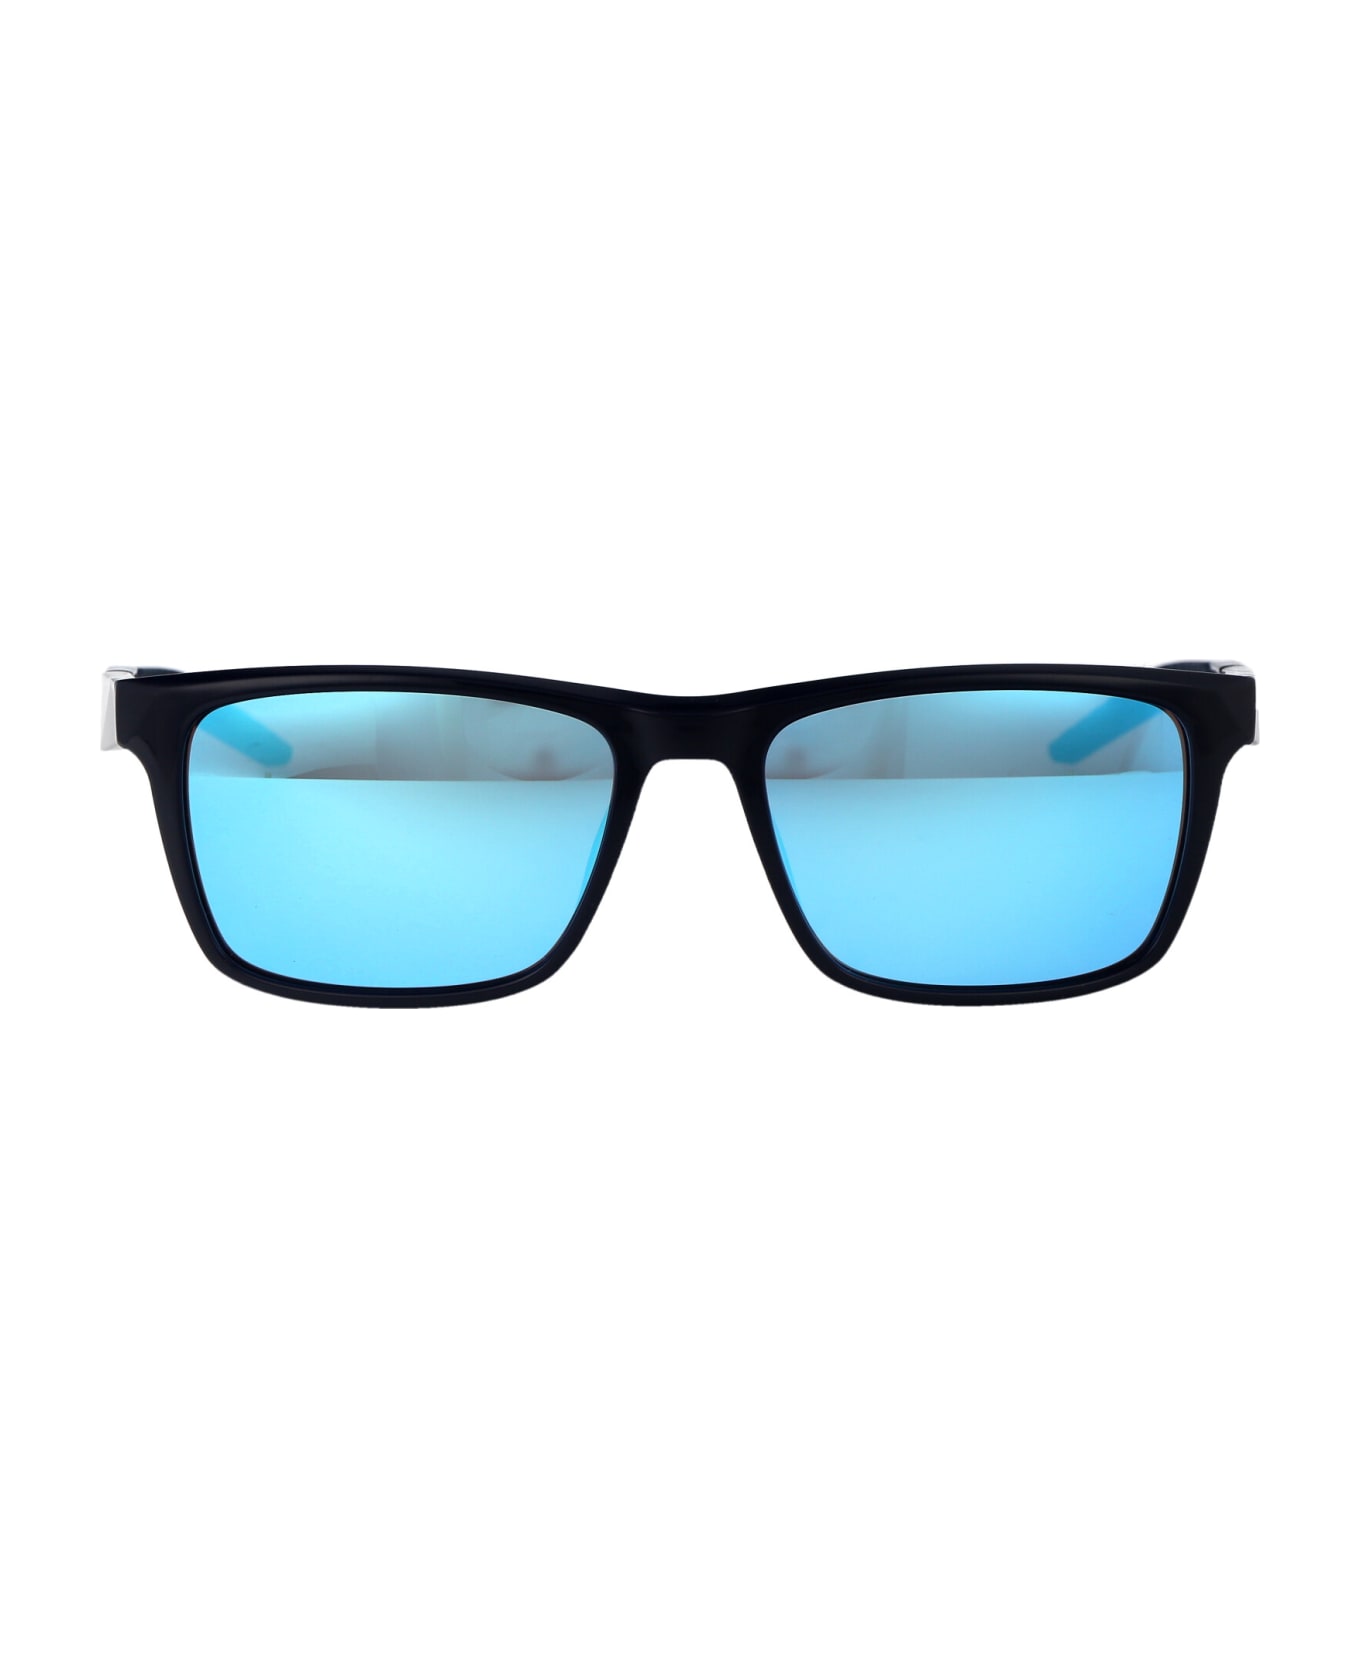 Nike Radeon 1 M Sunglasses - 410 BLUE MIRROR NAVY サングラス